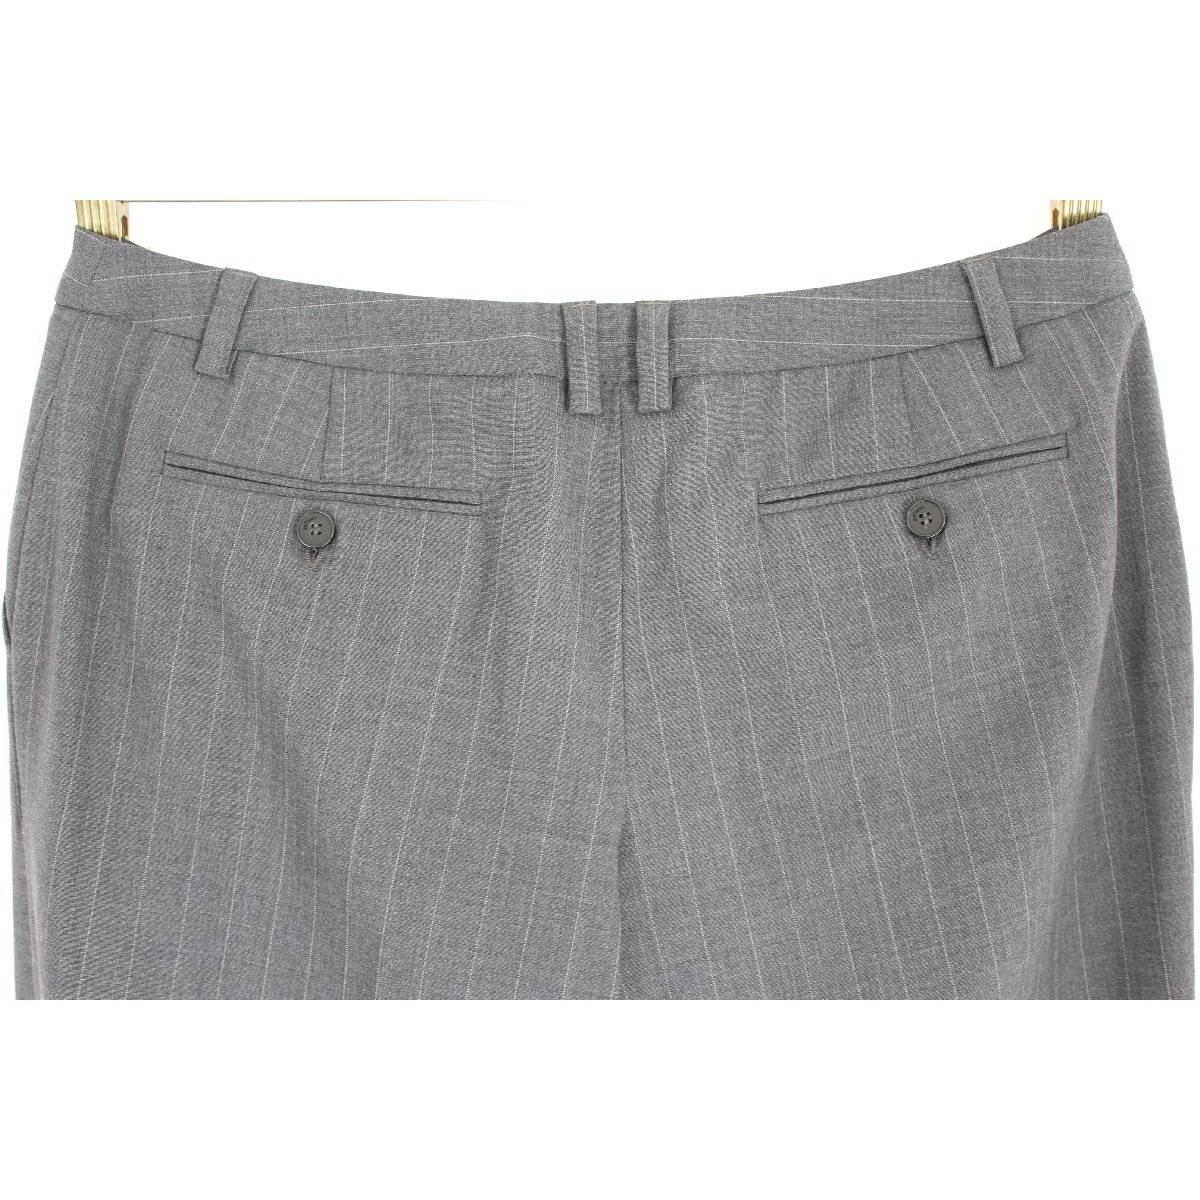 Gray John Galliano vintage wide legs pants gray pinstripe worn palace 90s wool blend